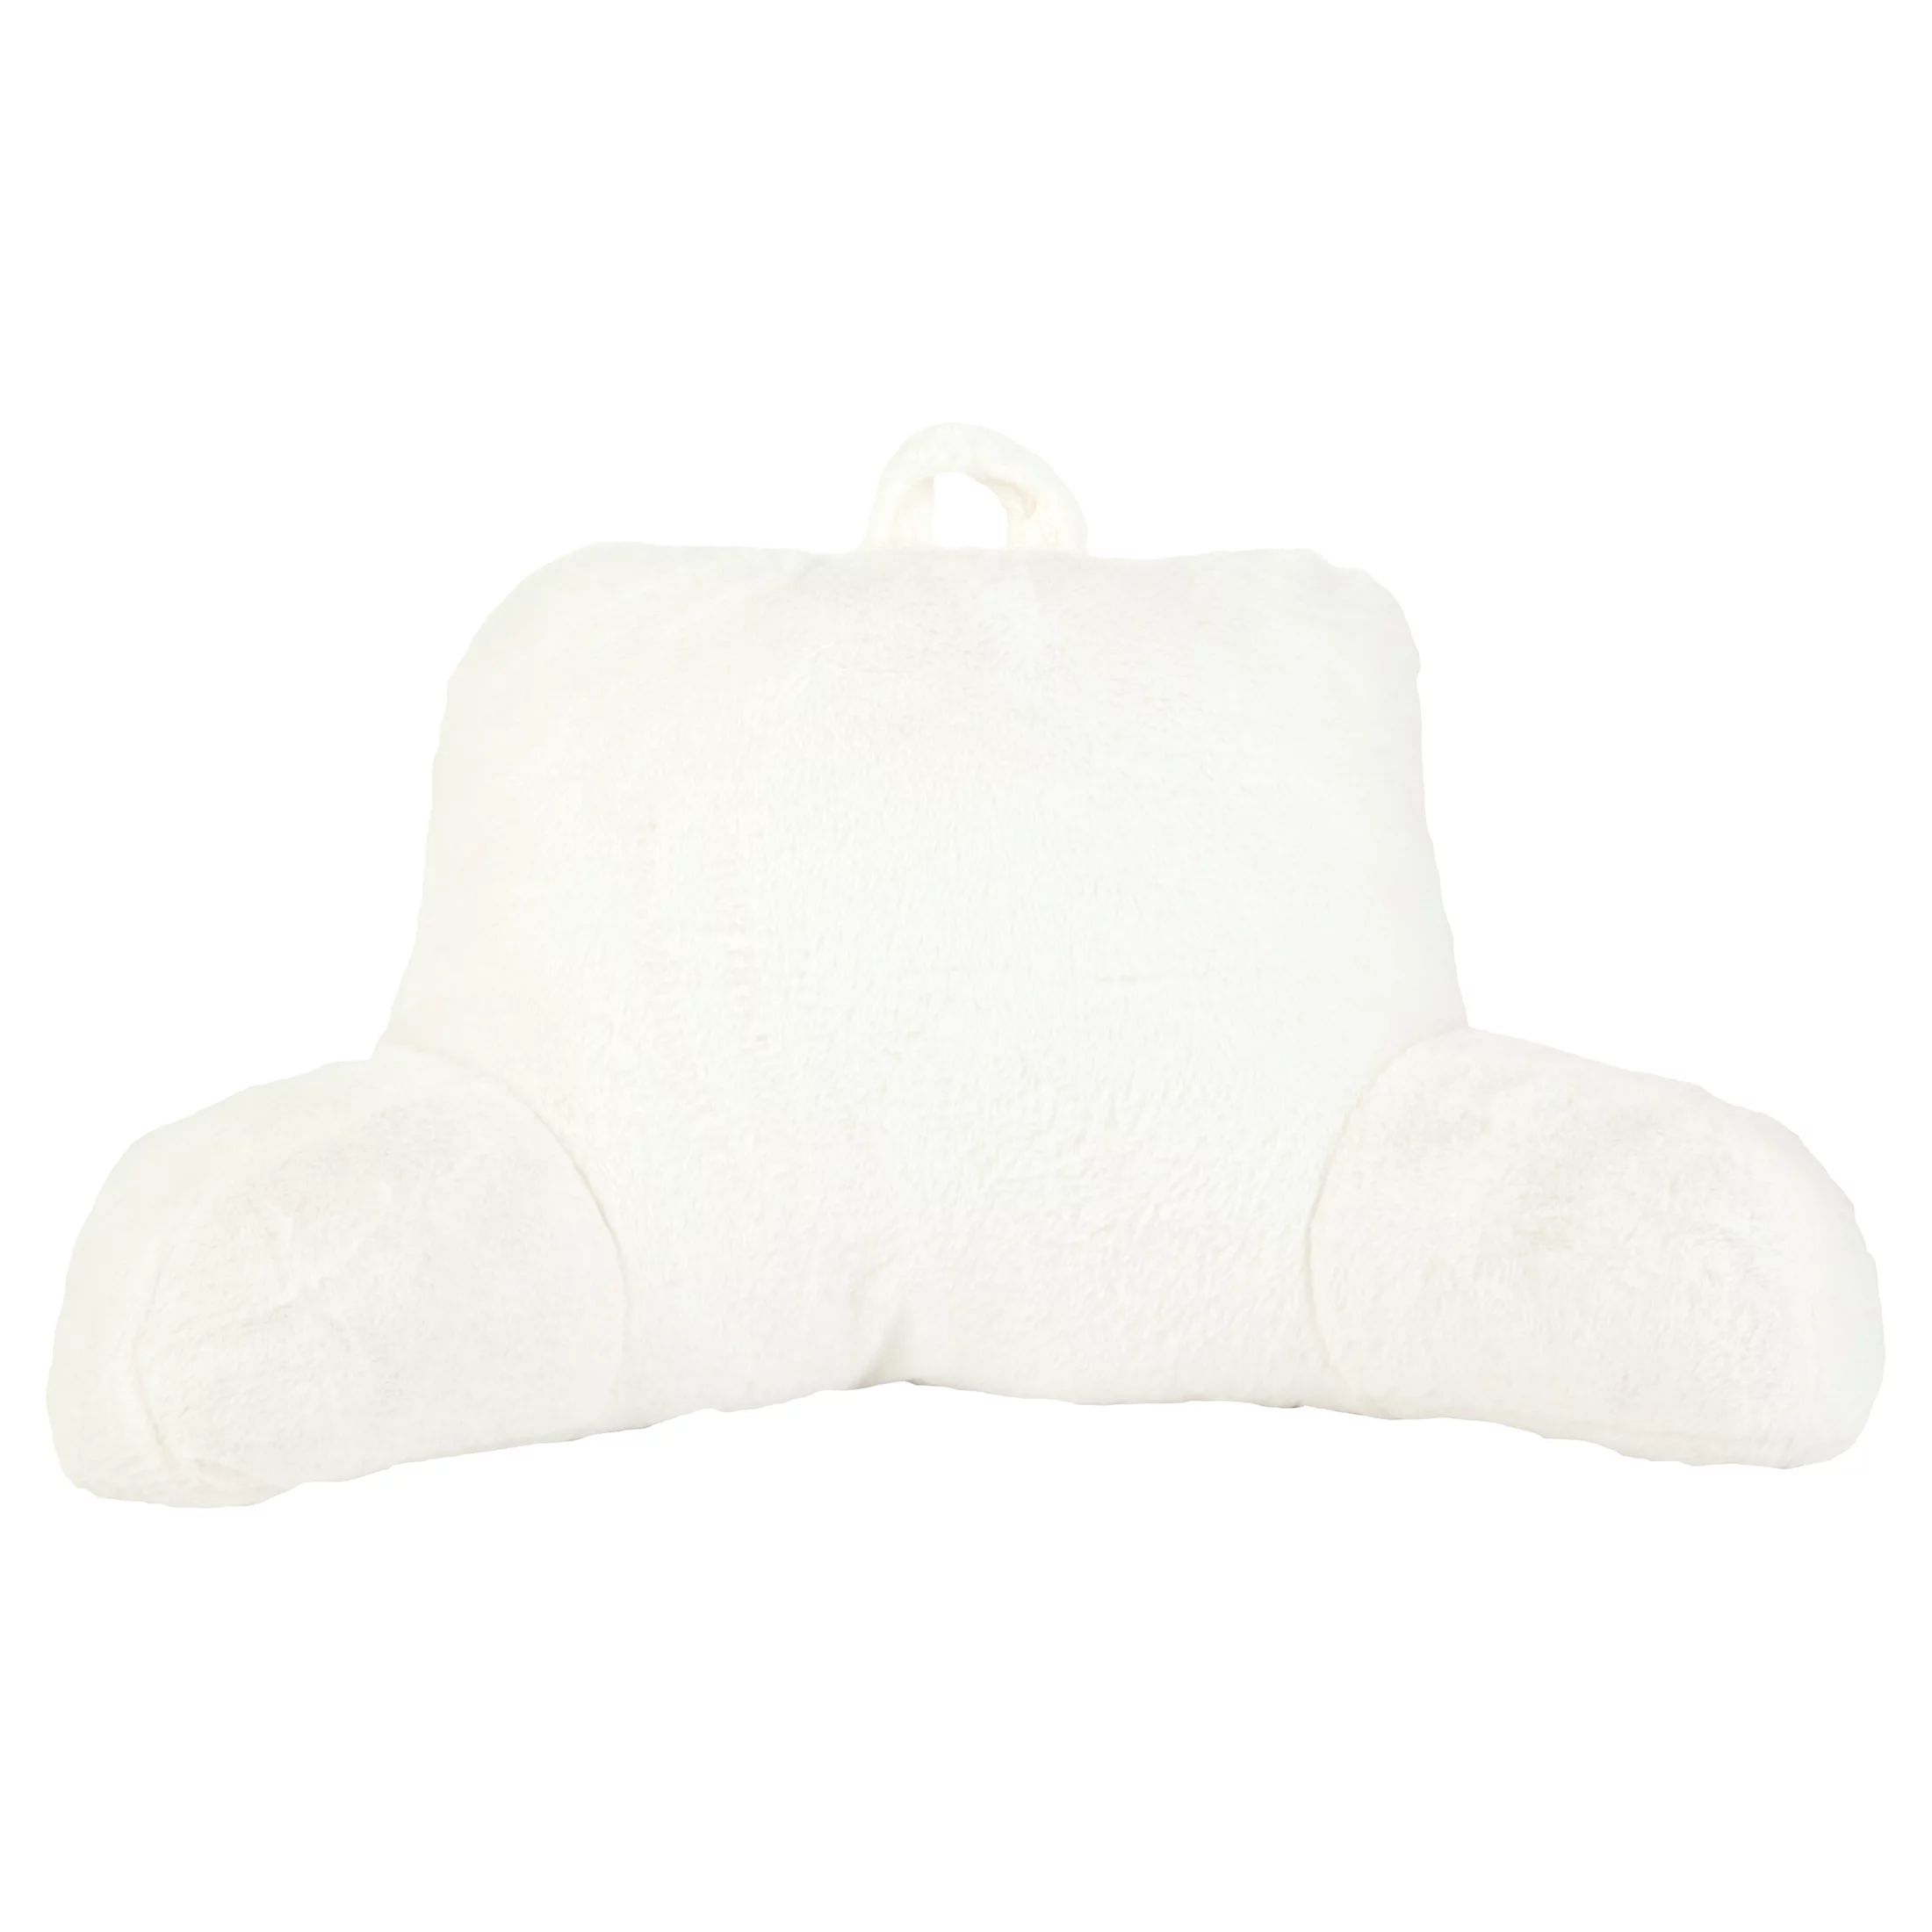 Mainstays Faux Fur Plush Bedrest Pillow, Specialty Size, Ivory, 1 Piece | Walmart (US)